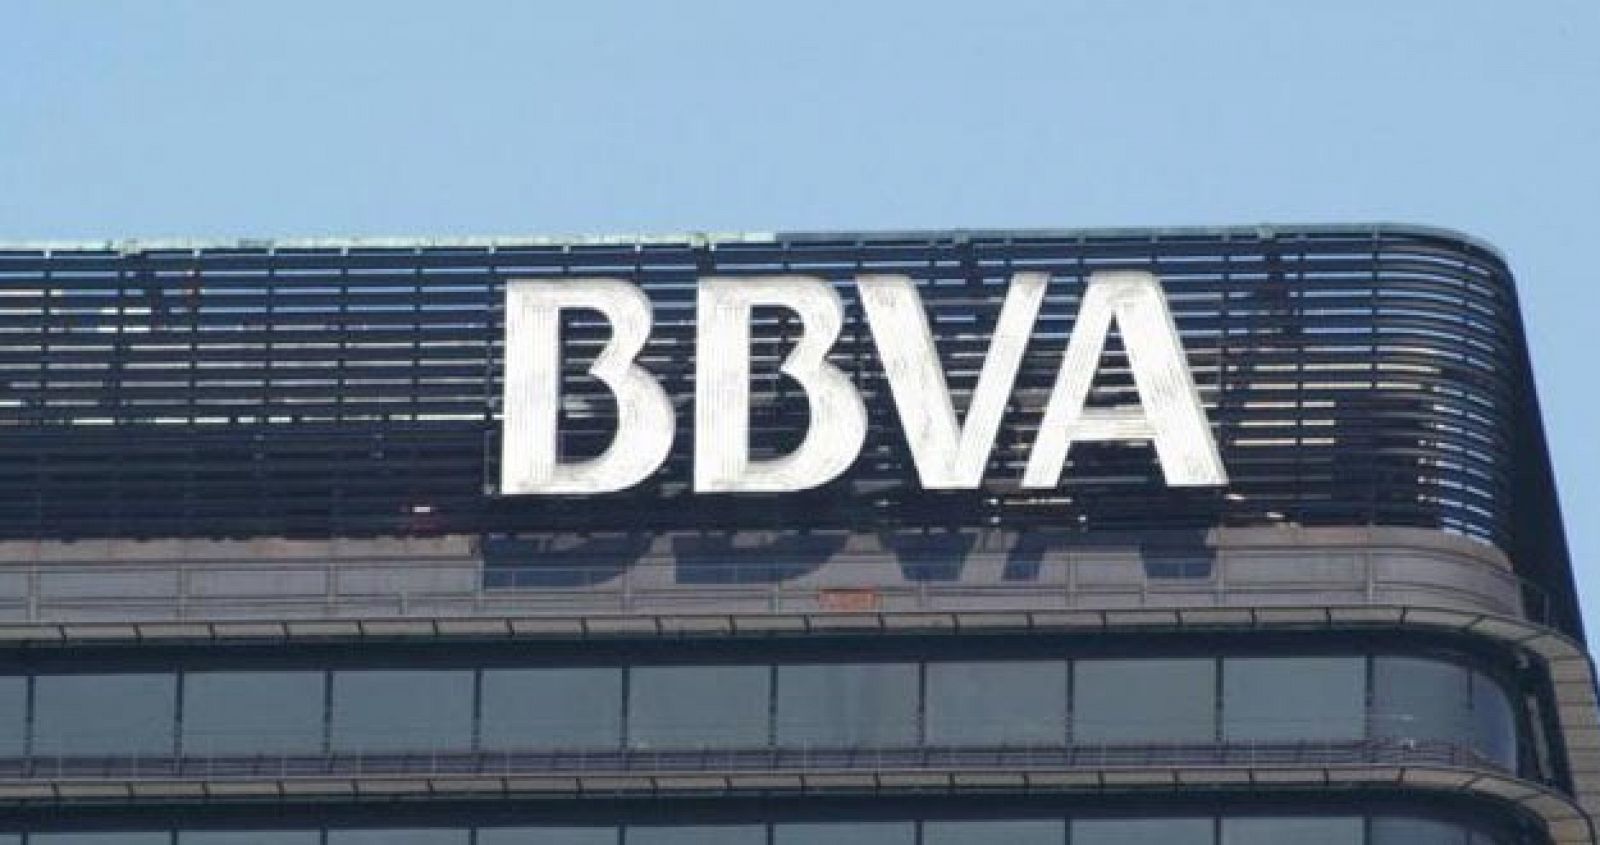 Sede del BBVA en Madrid